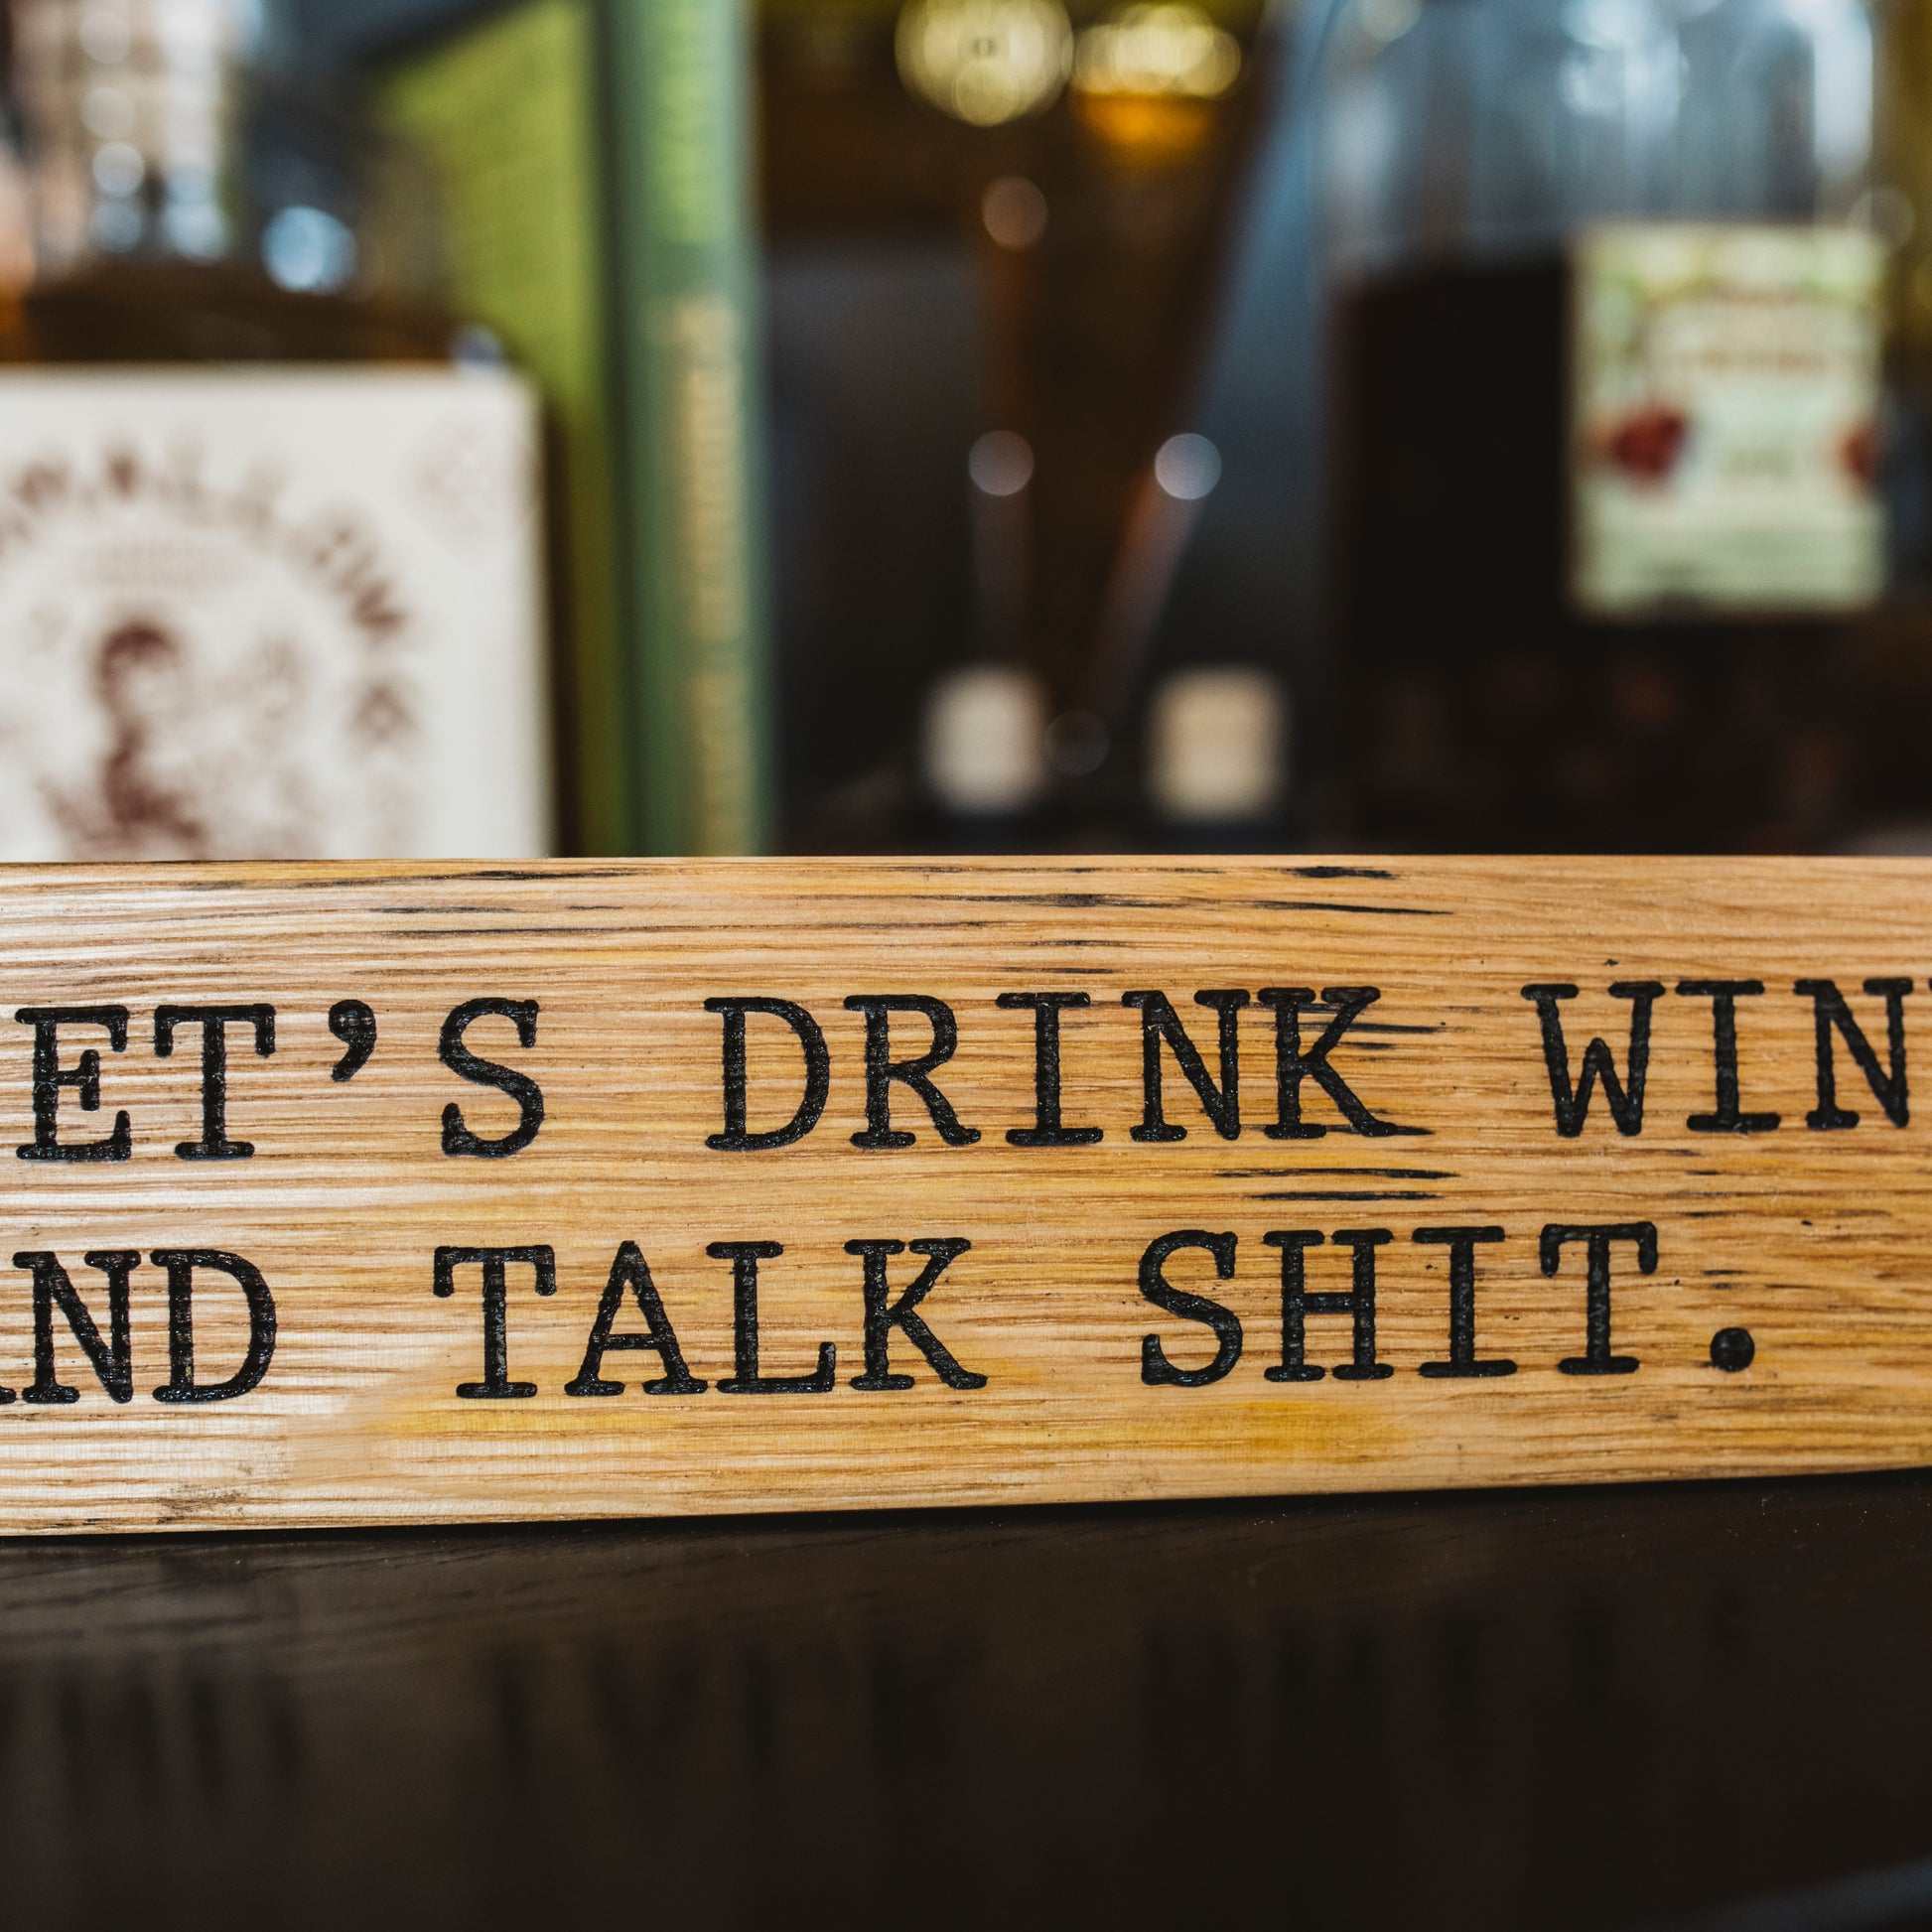 Let's Drink Wine and Talk Sh*t - Wood Sign - Motor City Barrels